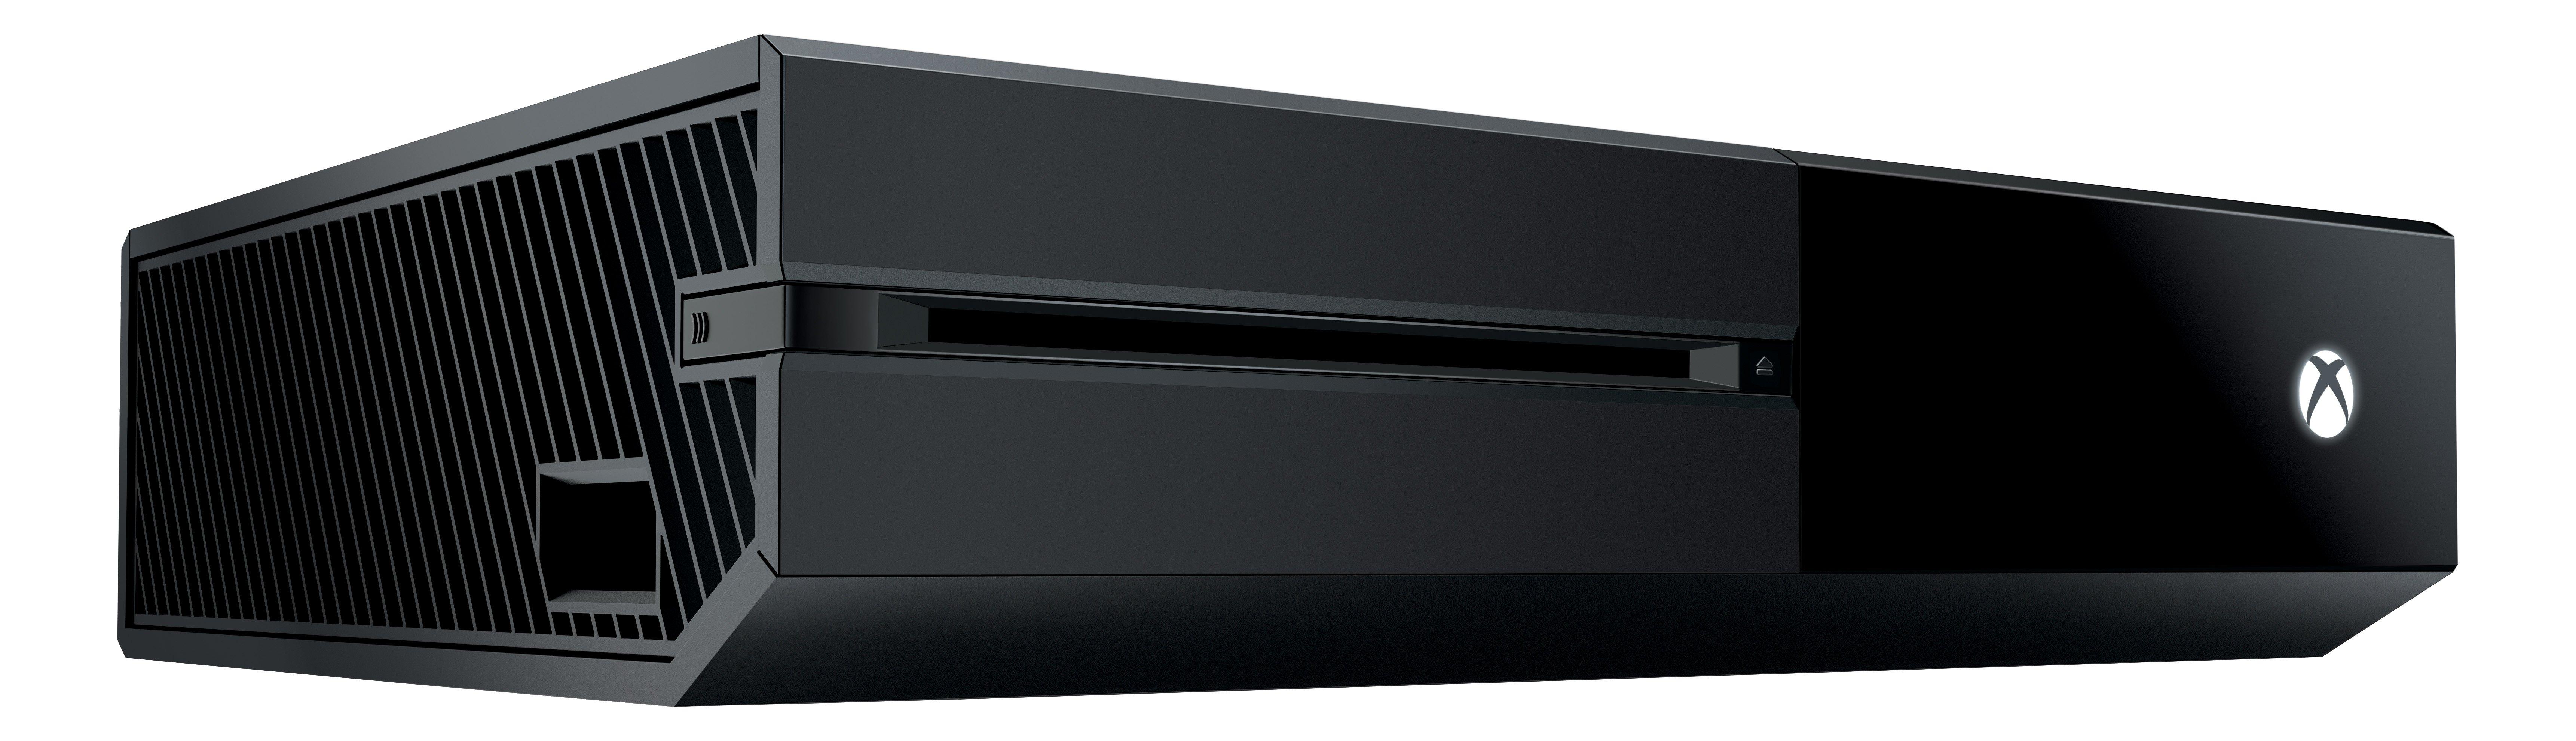 list item 3 of 7 Microsoft Xbox One 1TB Console Black